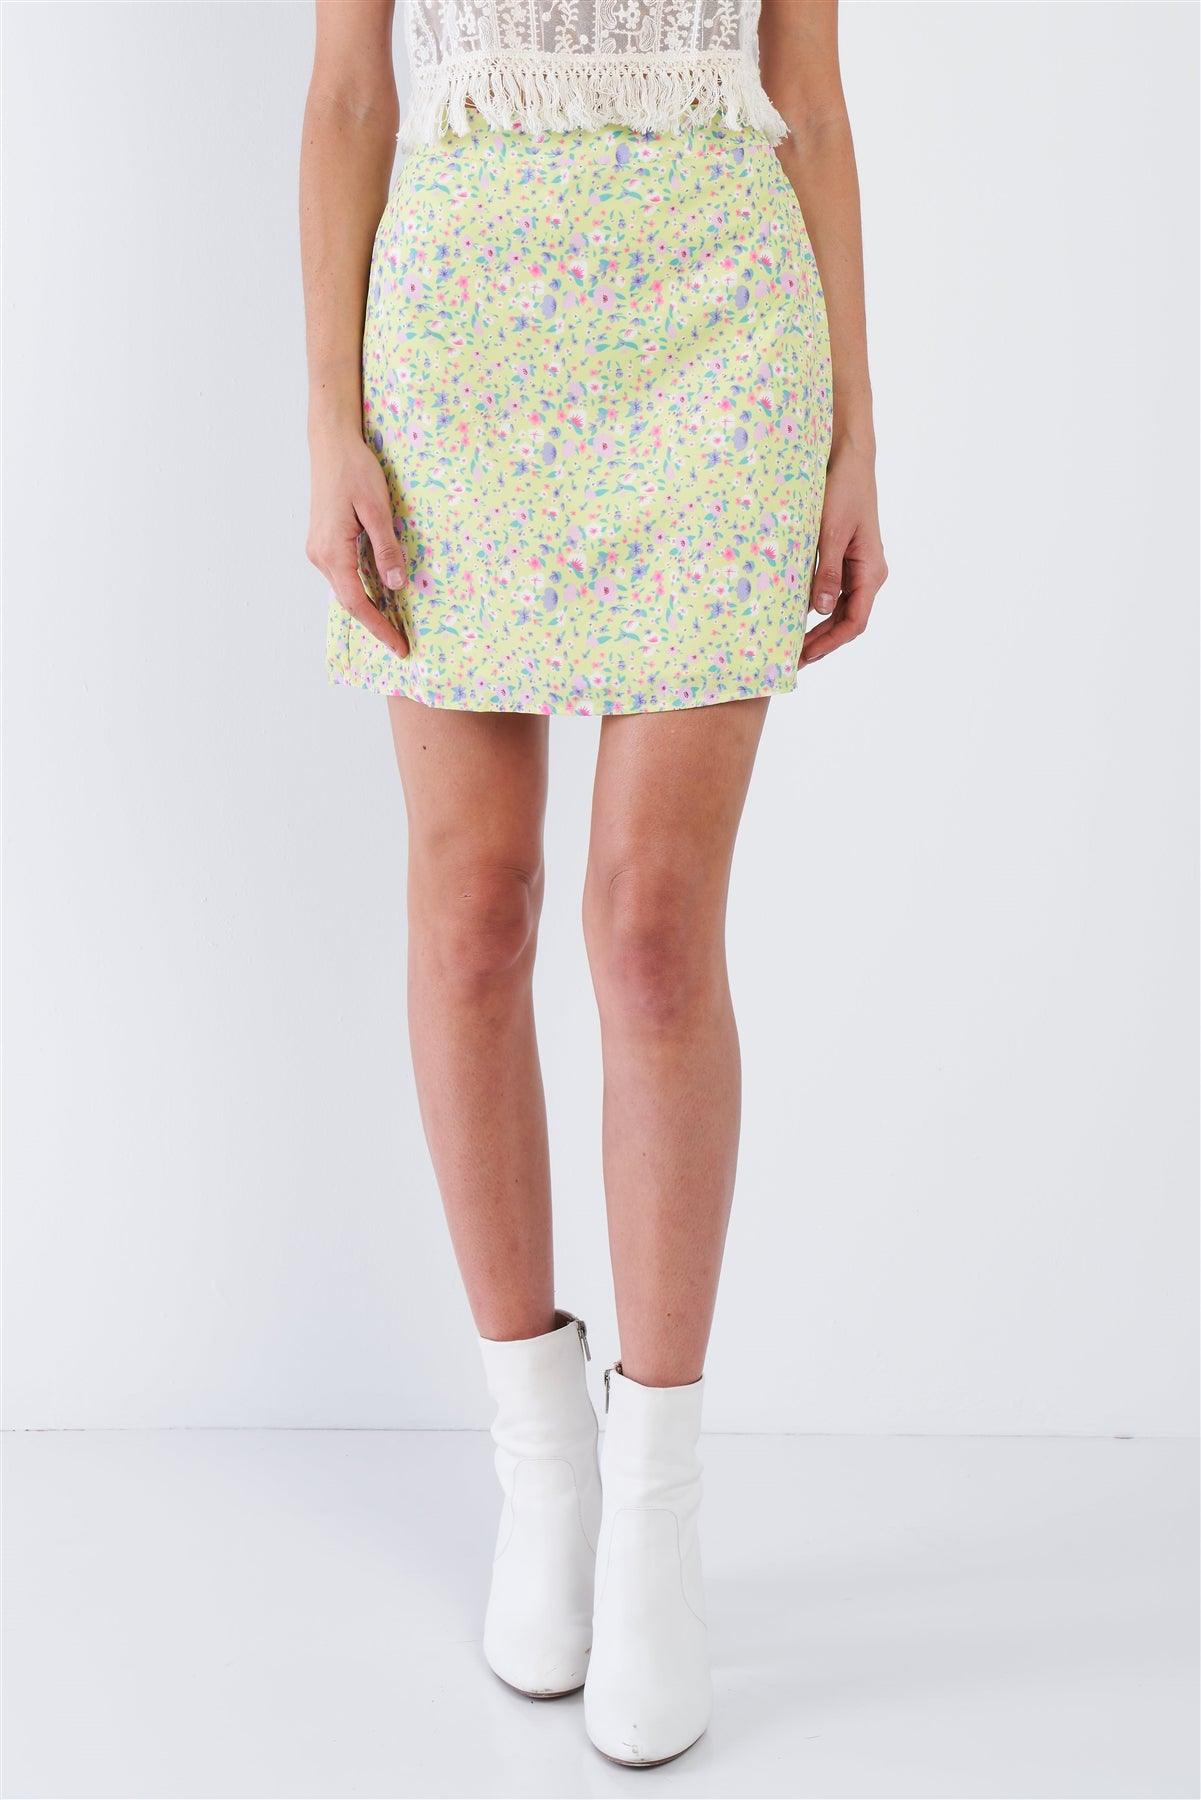 Lemon Yellow Floral Print Mid Rise Mini Floral Skirt   /3-2-1